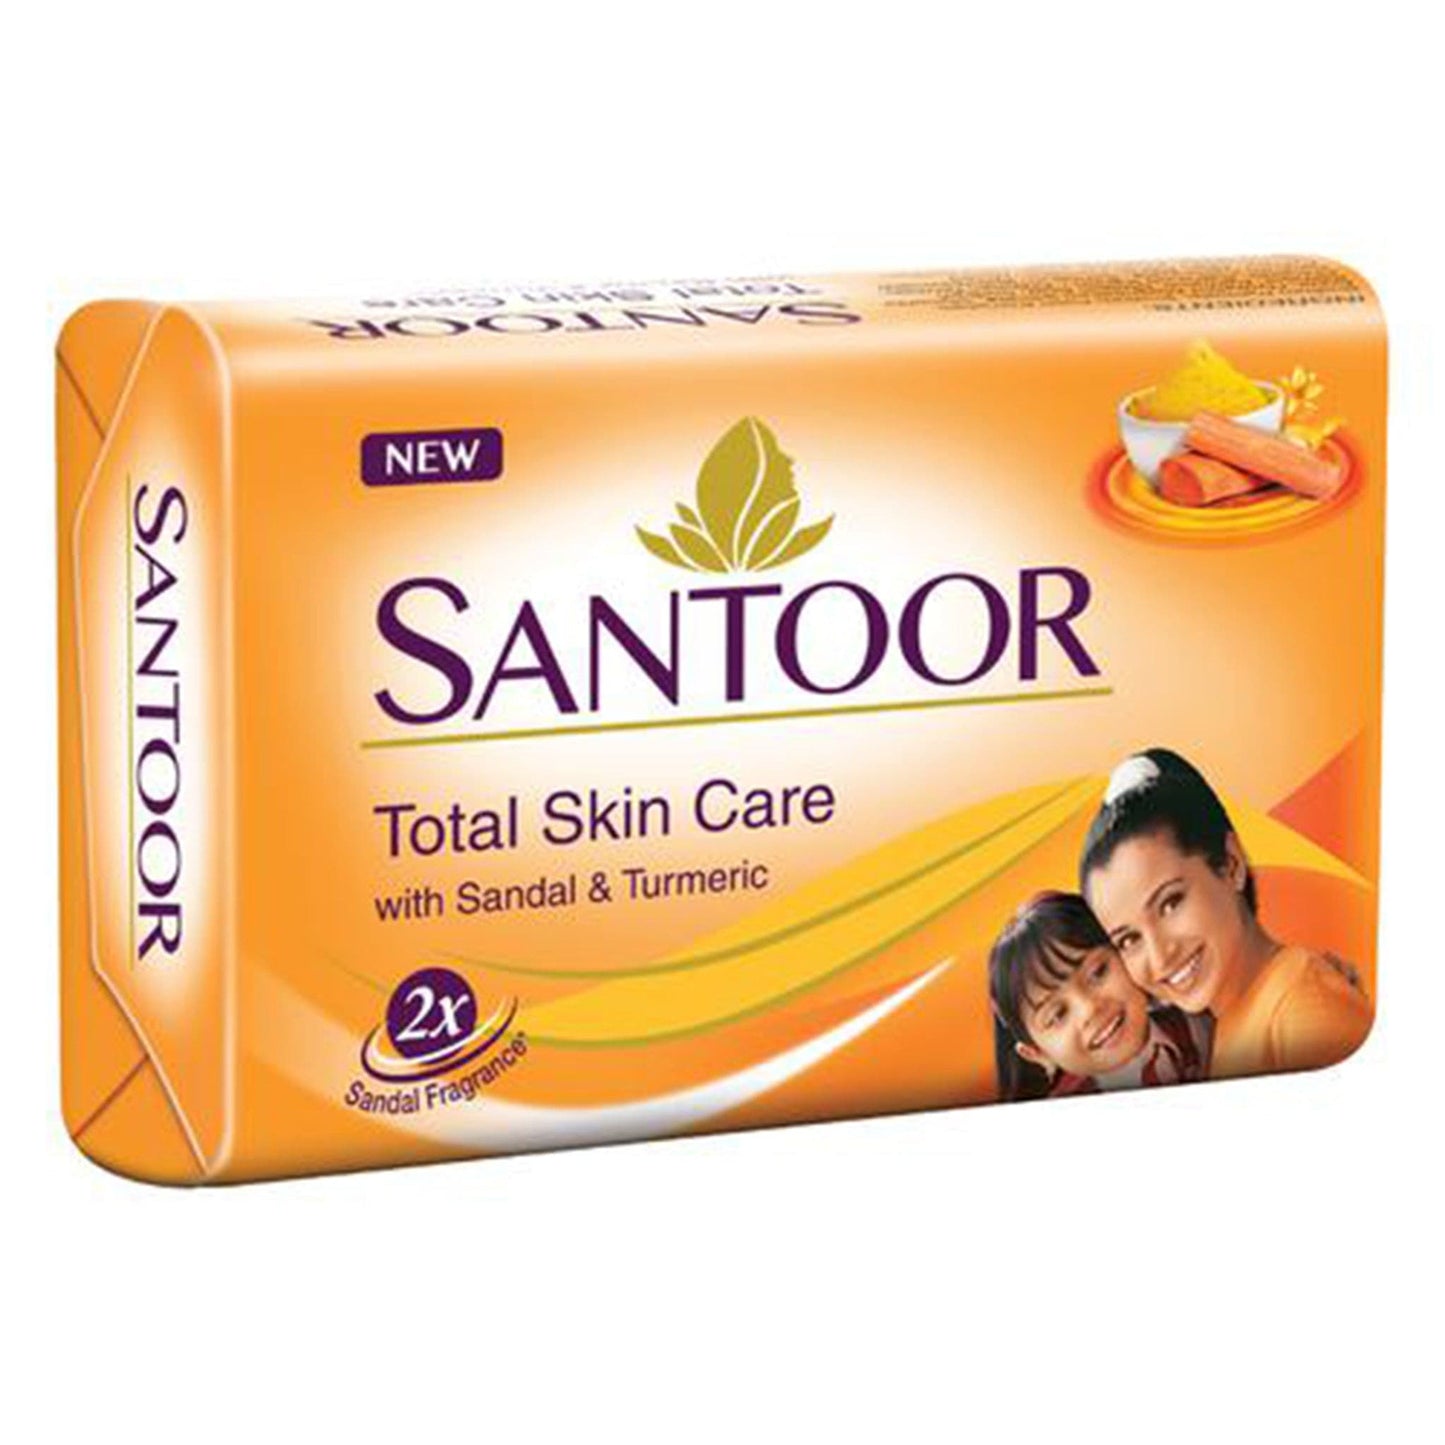 Santoor Sandal & Turmeric Soap.